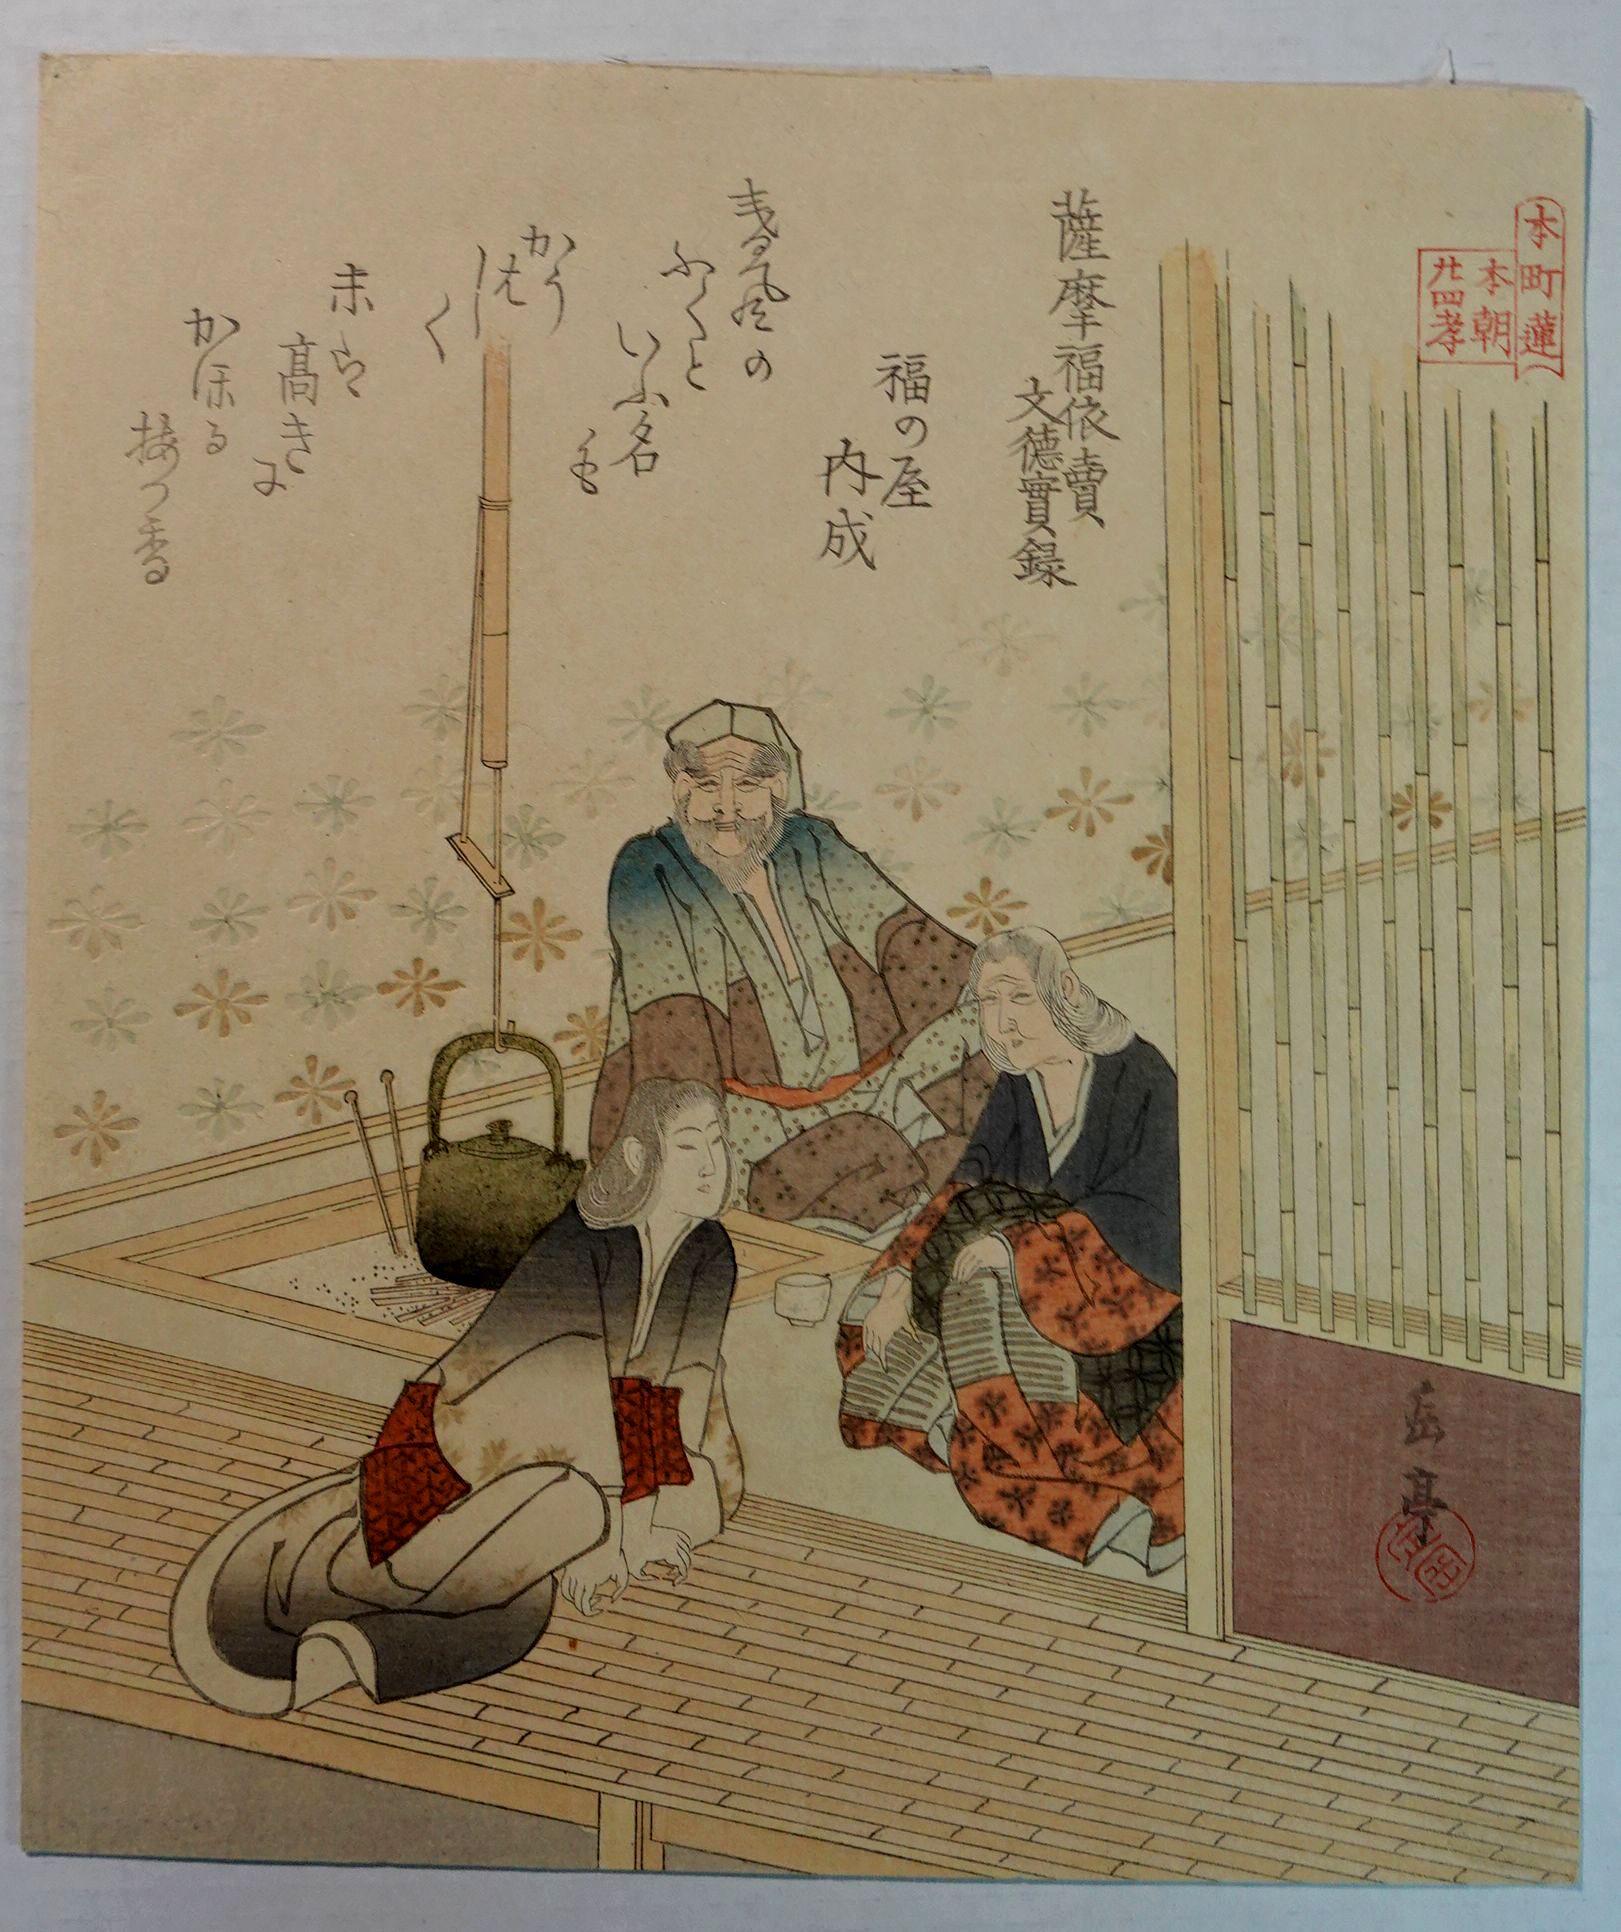 Japanese Woodblock Gakutei (1786-1868) by Harunobu Sugawara, original and unframed.

About the artist

Born in Edo as Harunobu Sugawara, Gakutei Yashima studied printmaking under Shuei and Hokkei. He moved to Osaka in the 1830s, where he